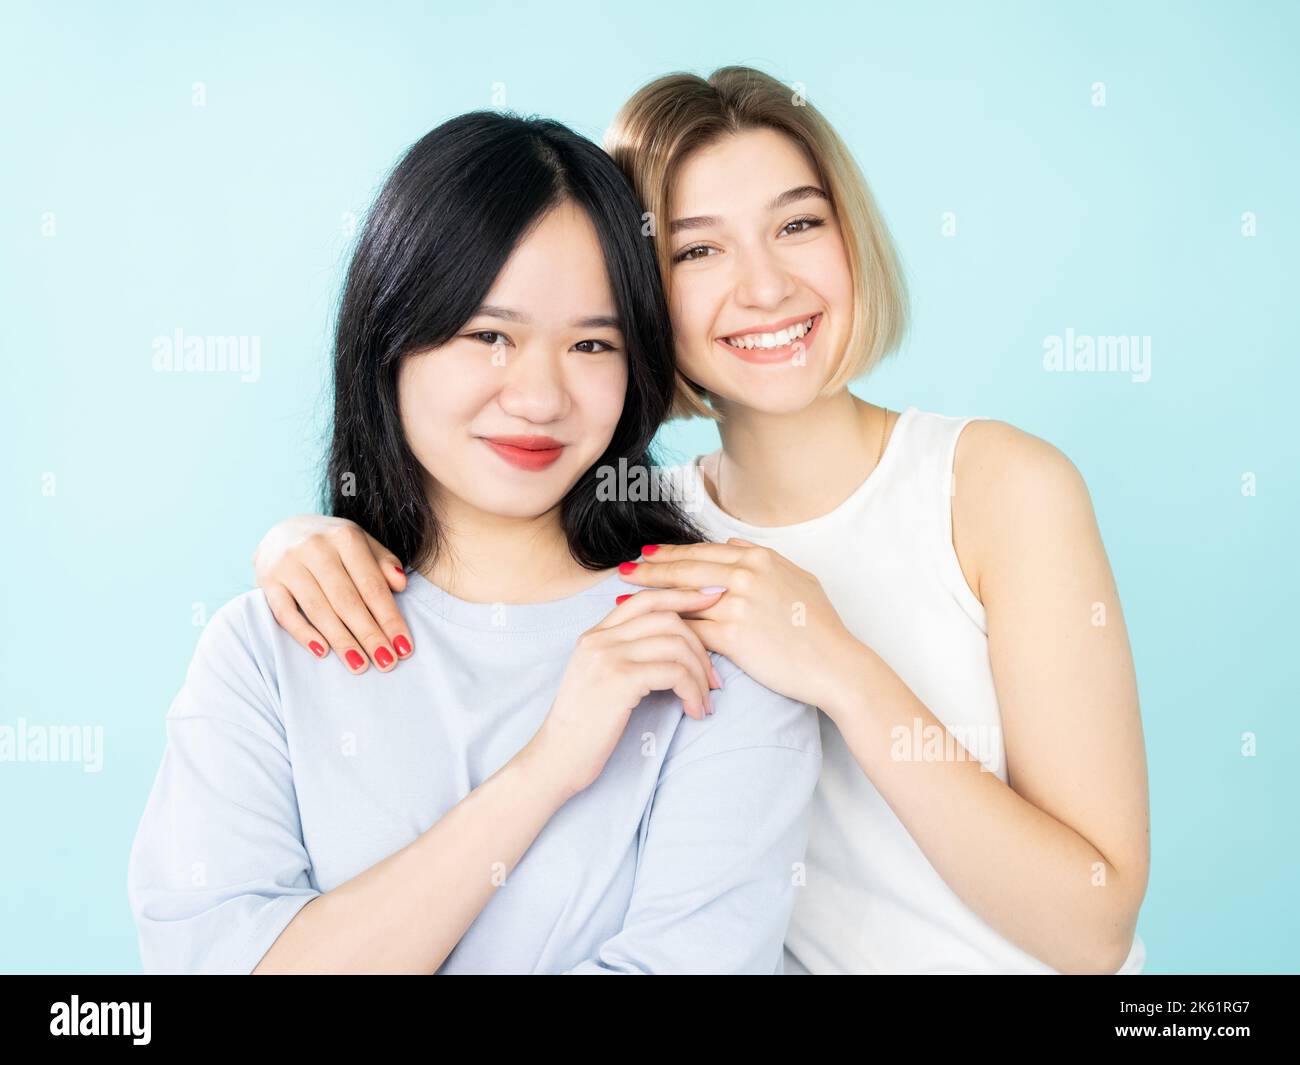 female friendship ethnic diversity enjoying Stock Photo